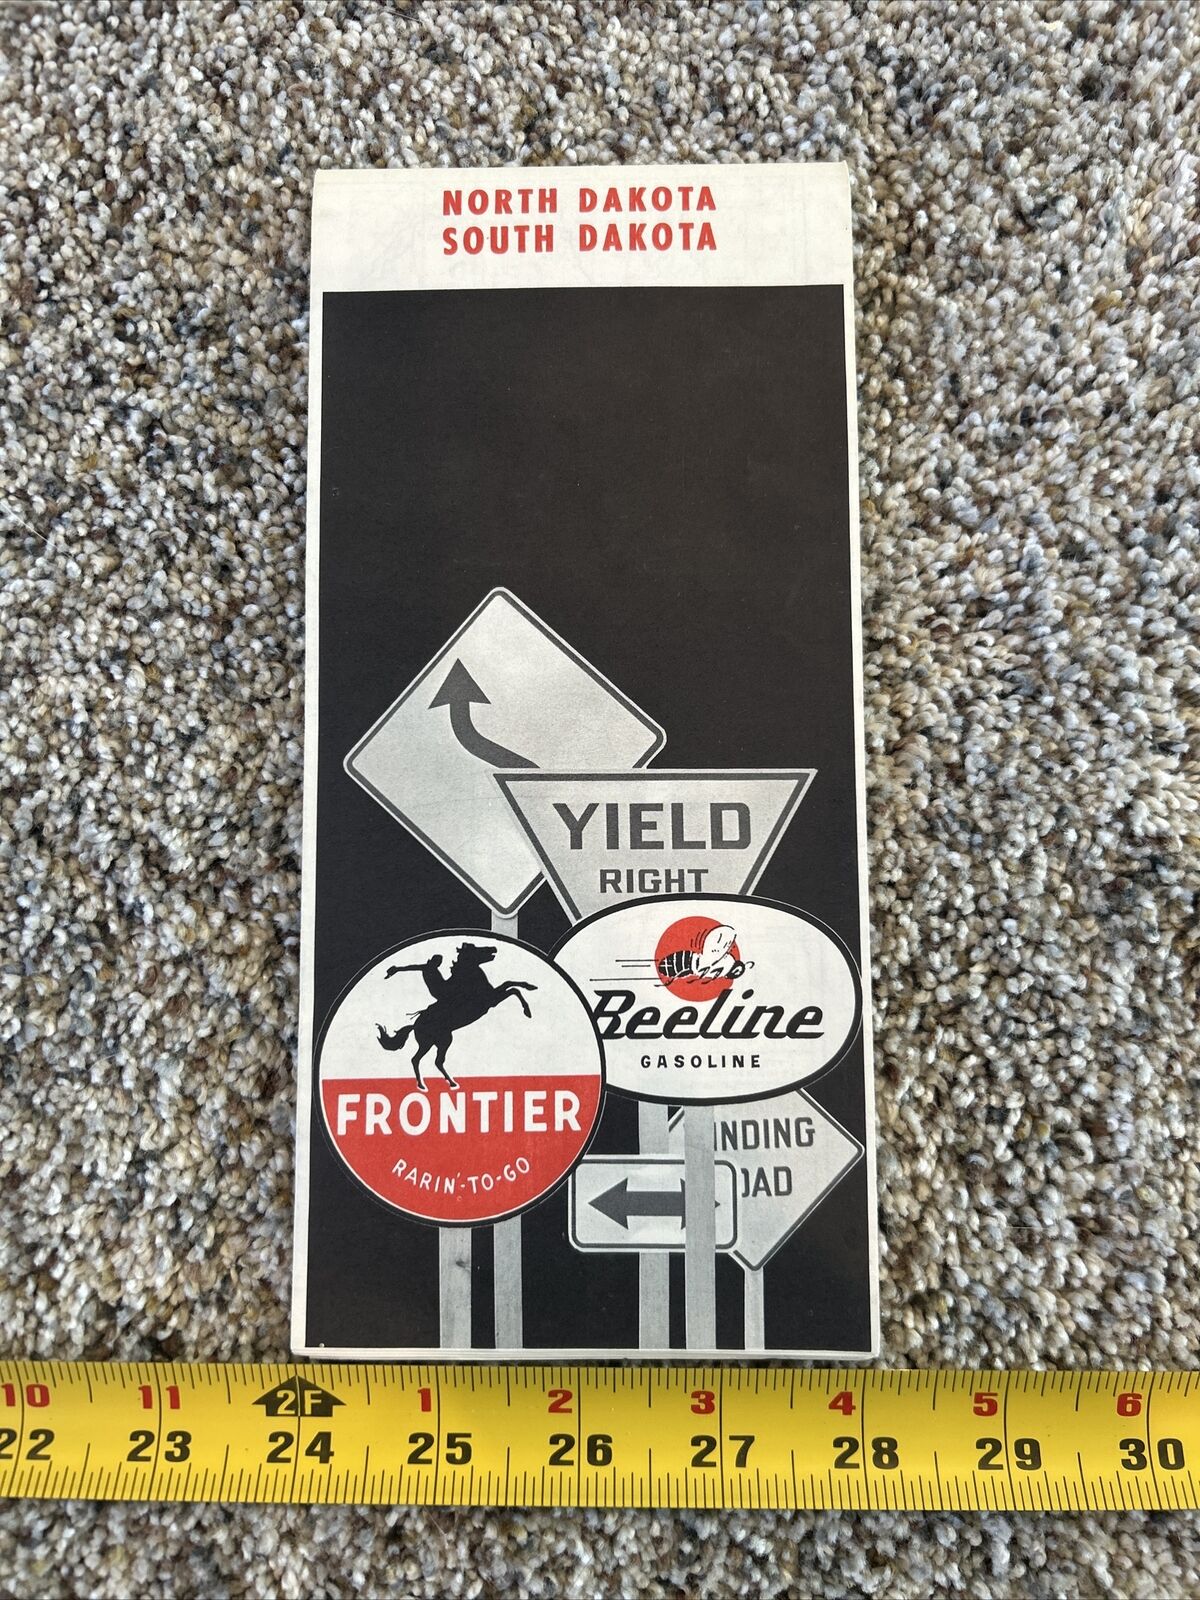 1963 Frontier Oil Beeline Gasoline North Dakota South Dakota Road Map